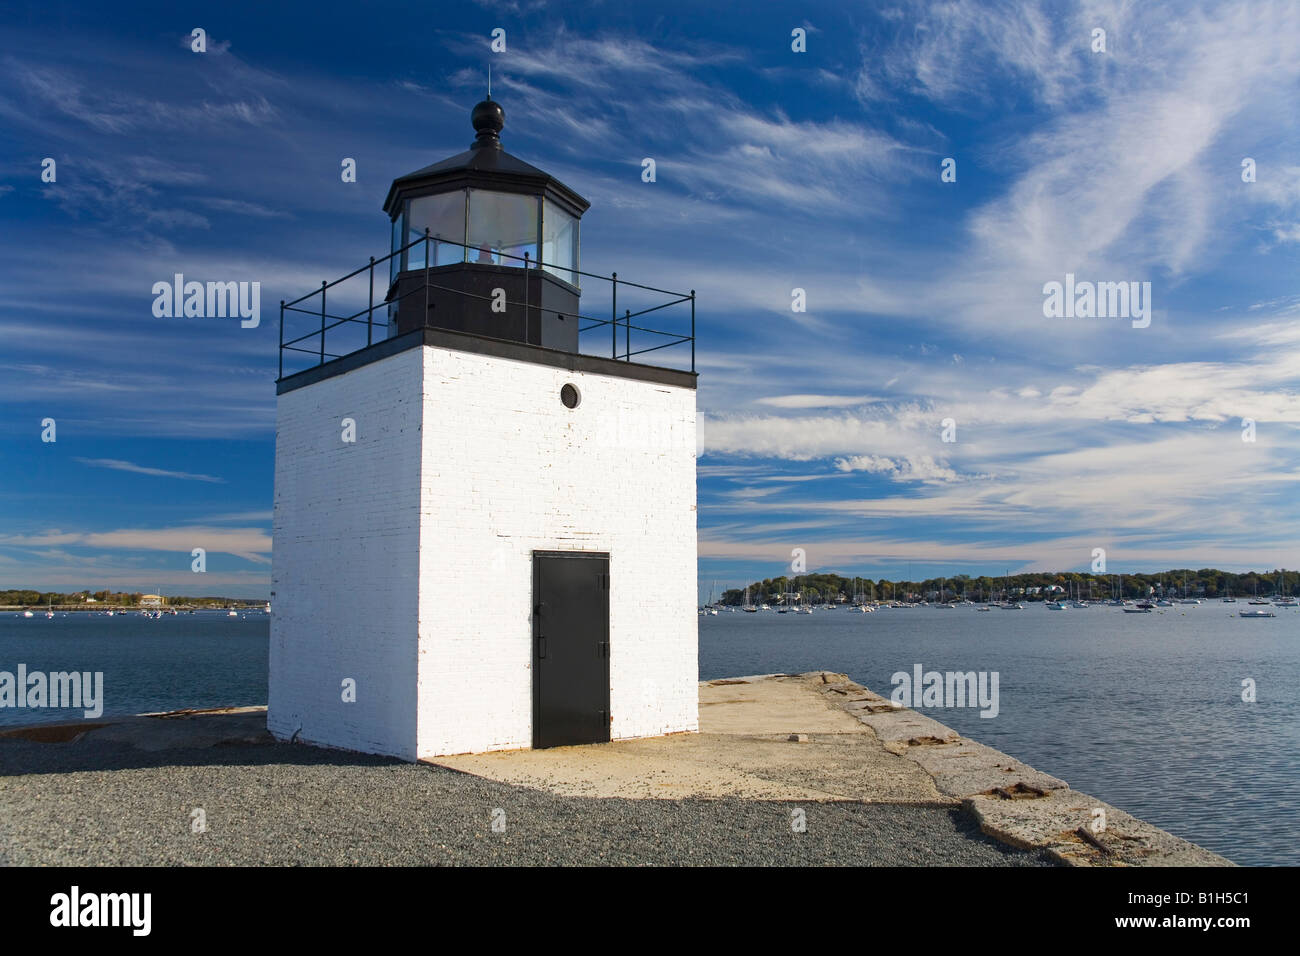 Leuchtturm an der Küste, Derby Wharf Leuchtturm, Hafen Salem, Salem,  Massachusetts, USA Stockfotografie - Alamy